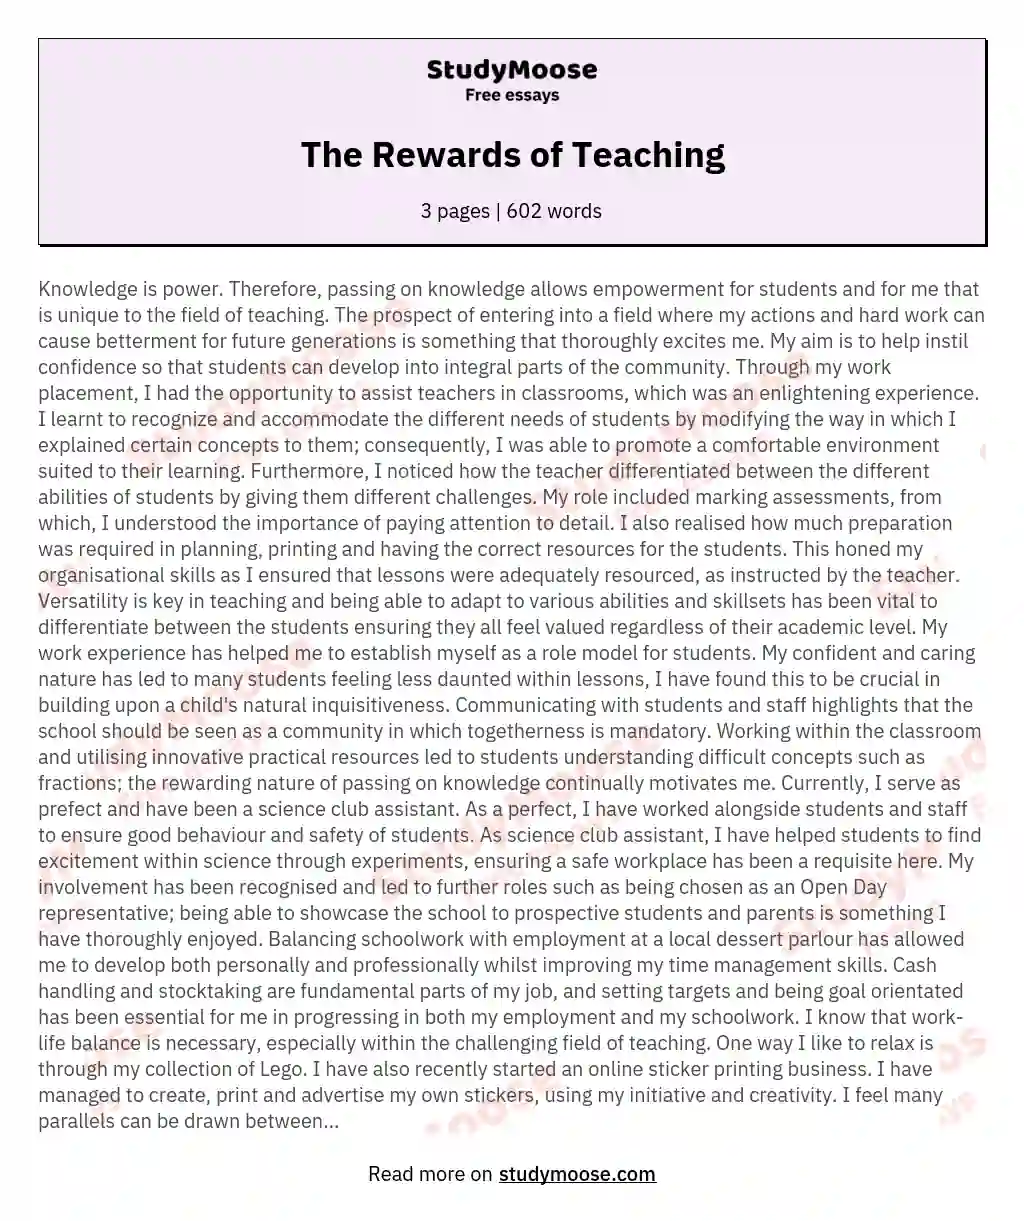 The Rewards of Teaching essay